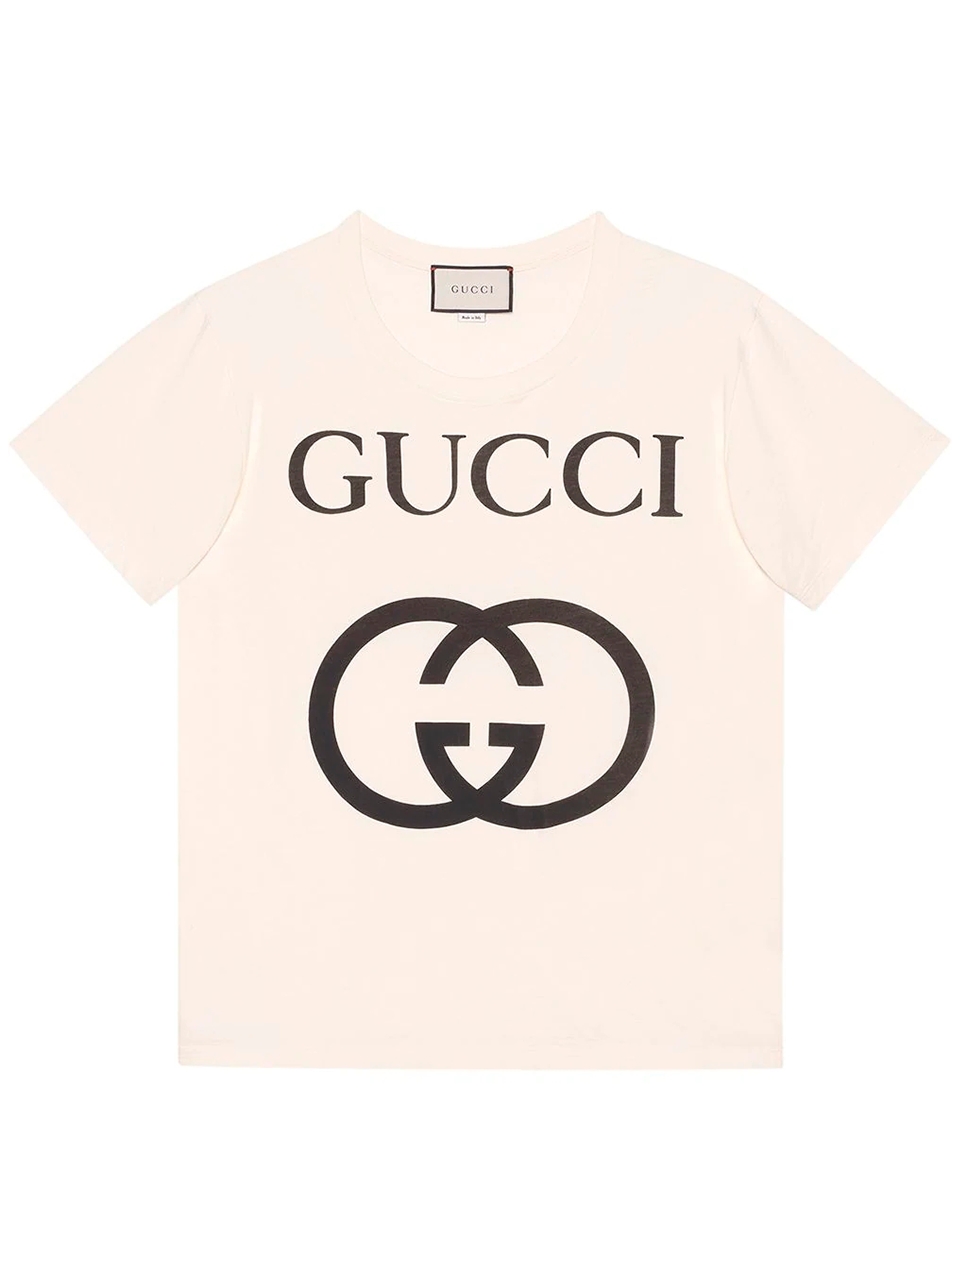 Imagem de: Camiseta Gucci Oversized Branca com Interlocking G